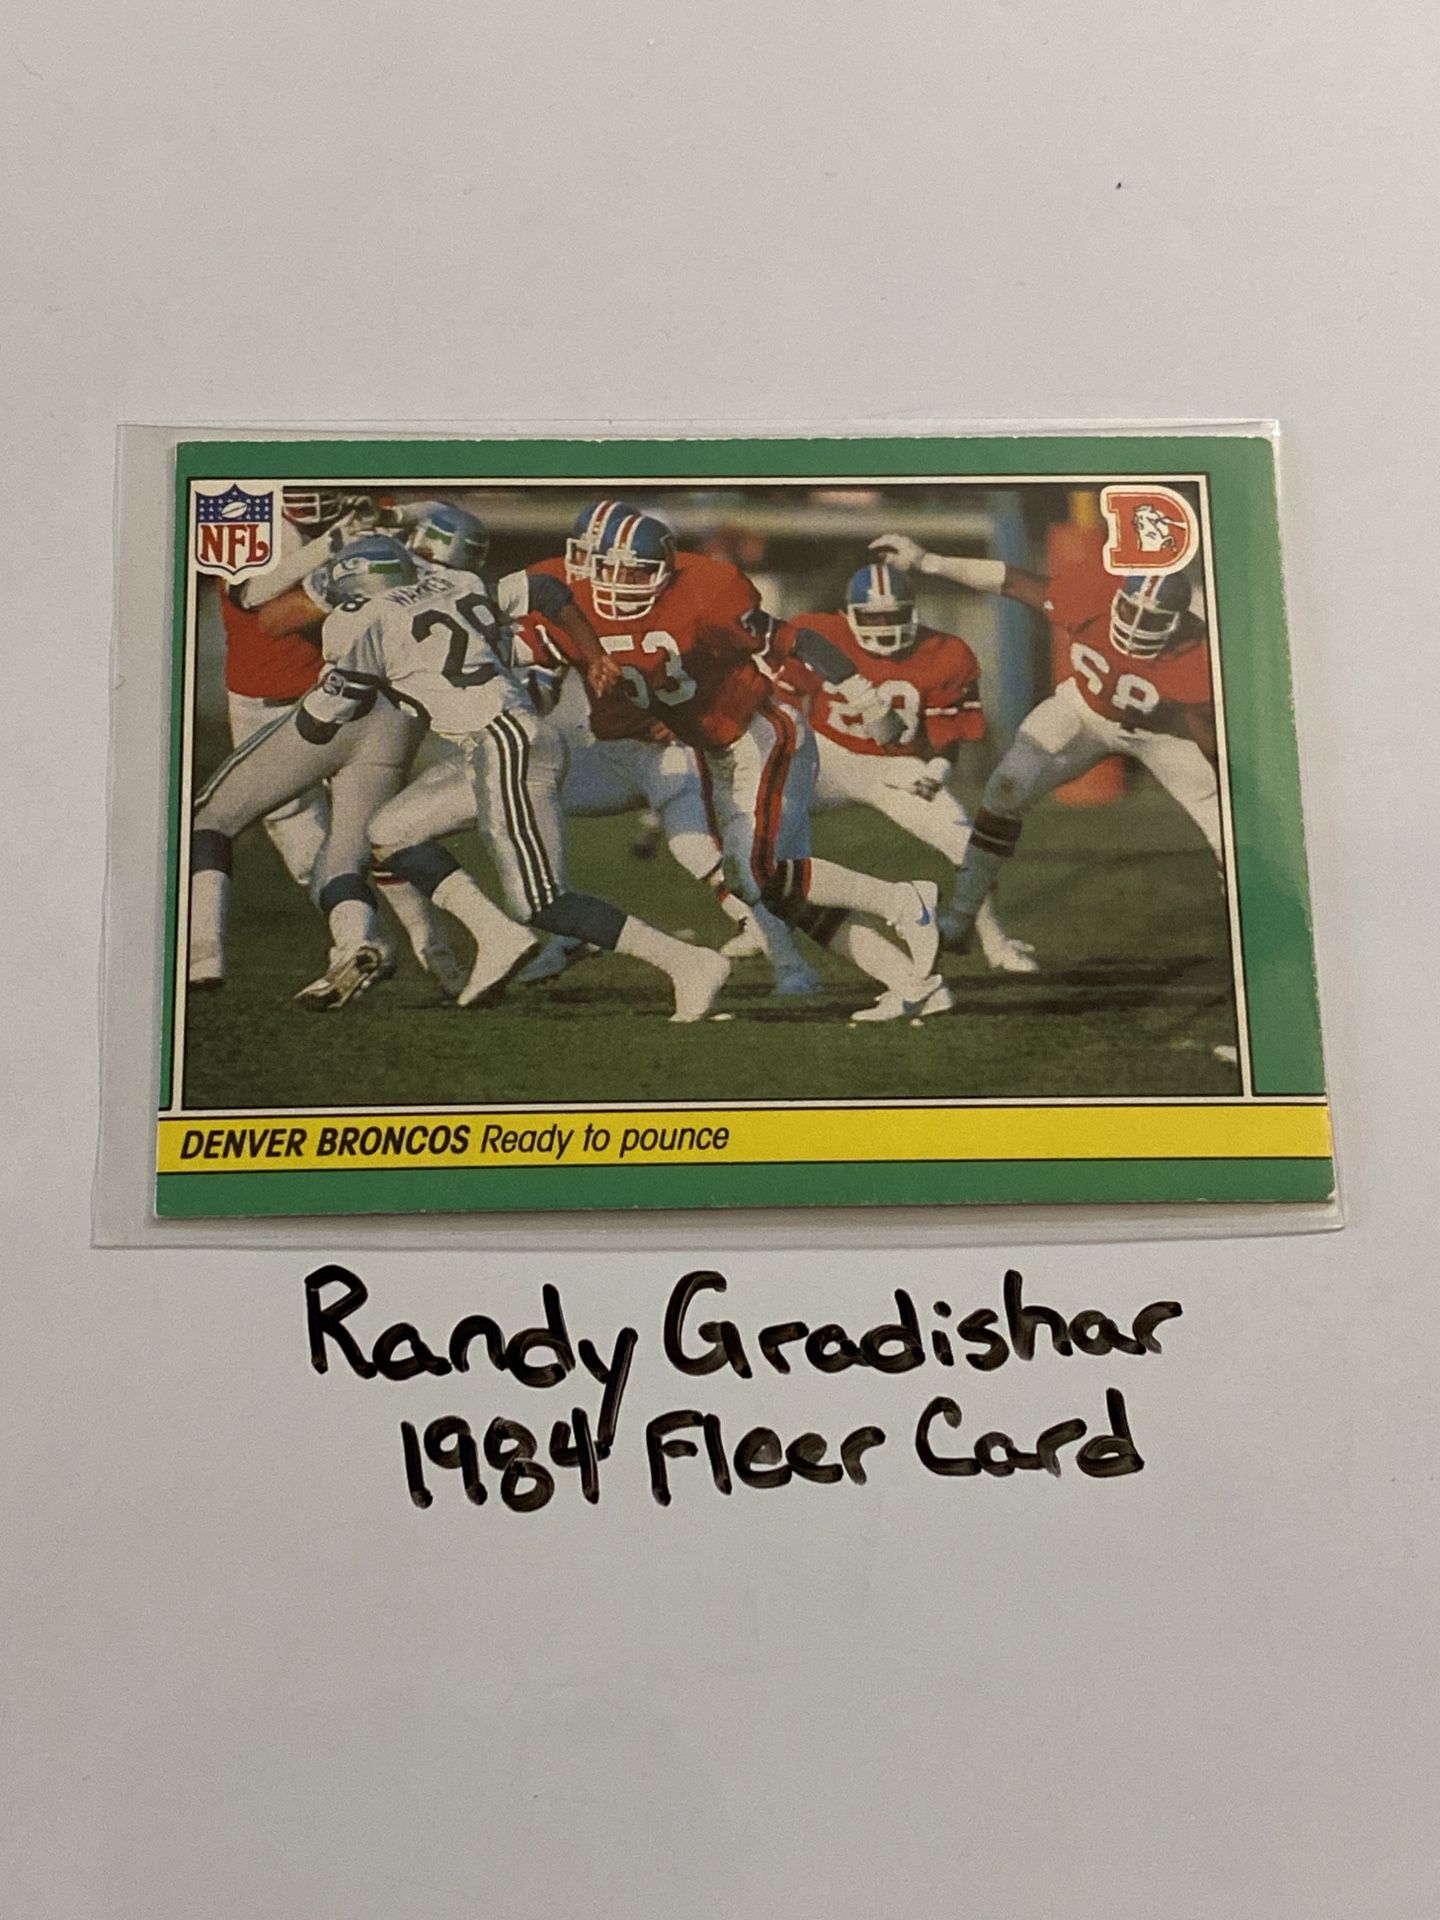 Randy Gradishar Denver Broncos Hall of Fame LB Fleer Card. 